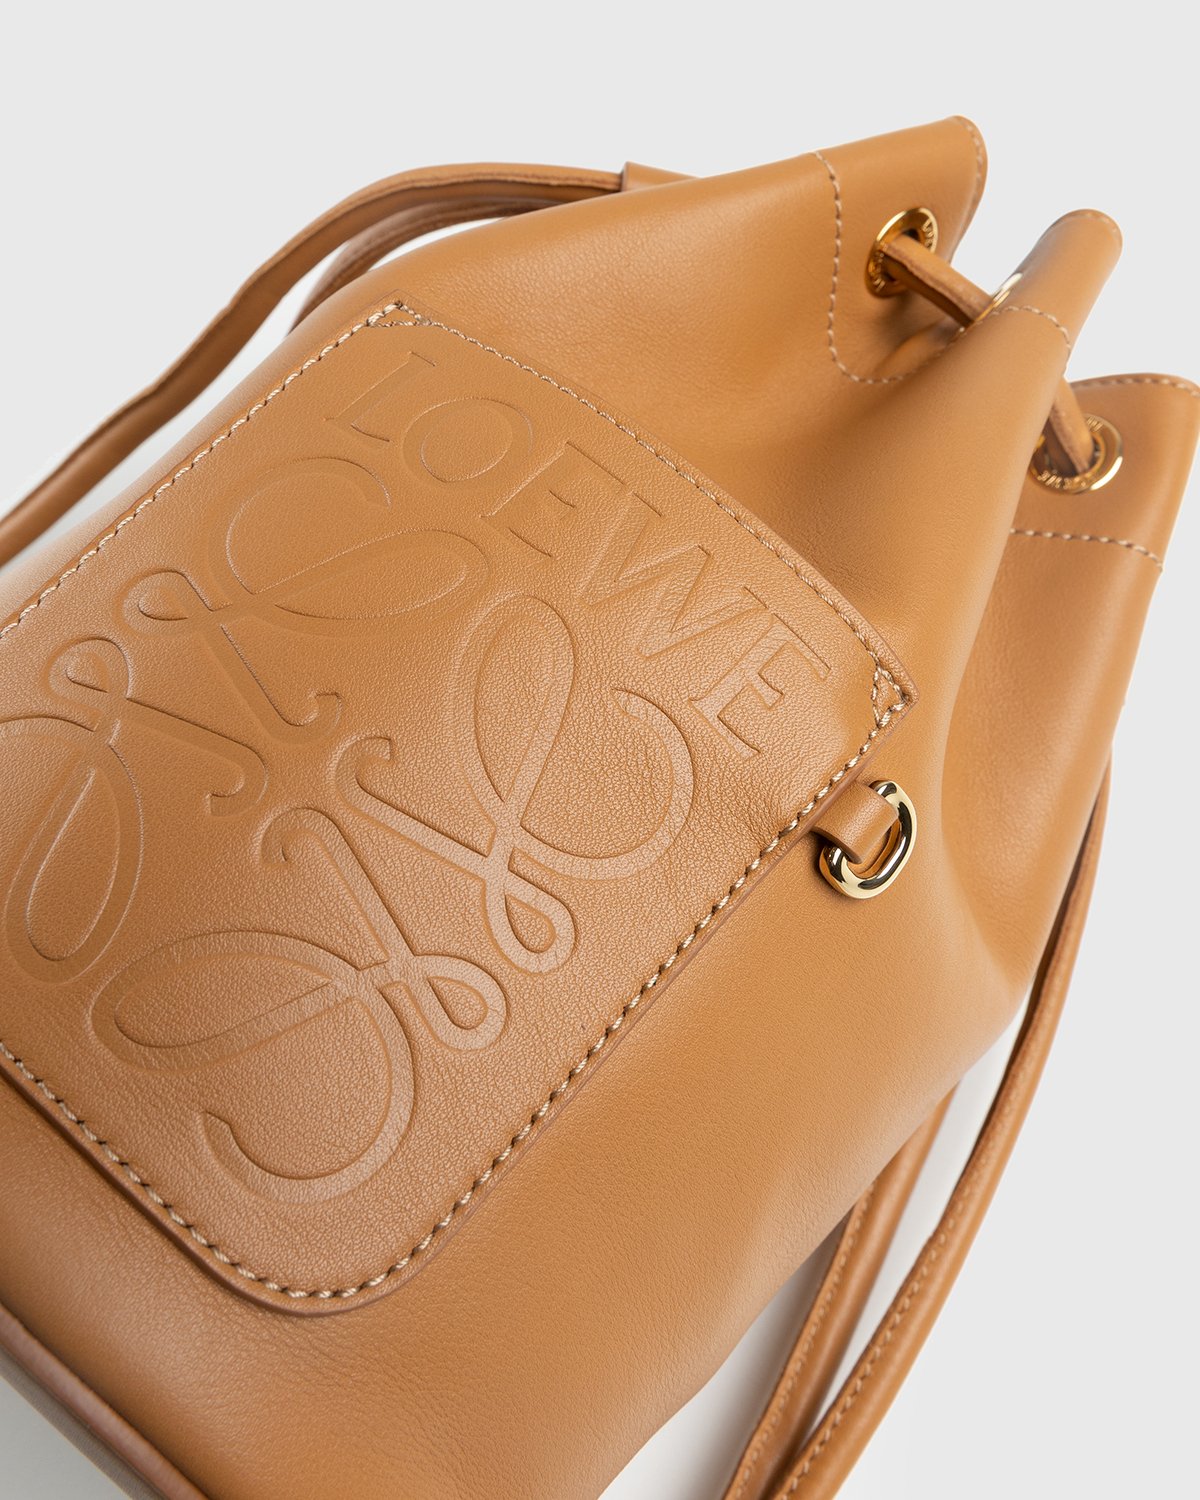 Loewe - Paula's Ibiza Sailor Small Bag Warm Desert - Accessories - Brown - Image 5